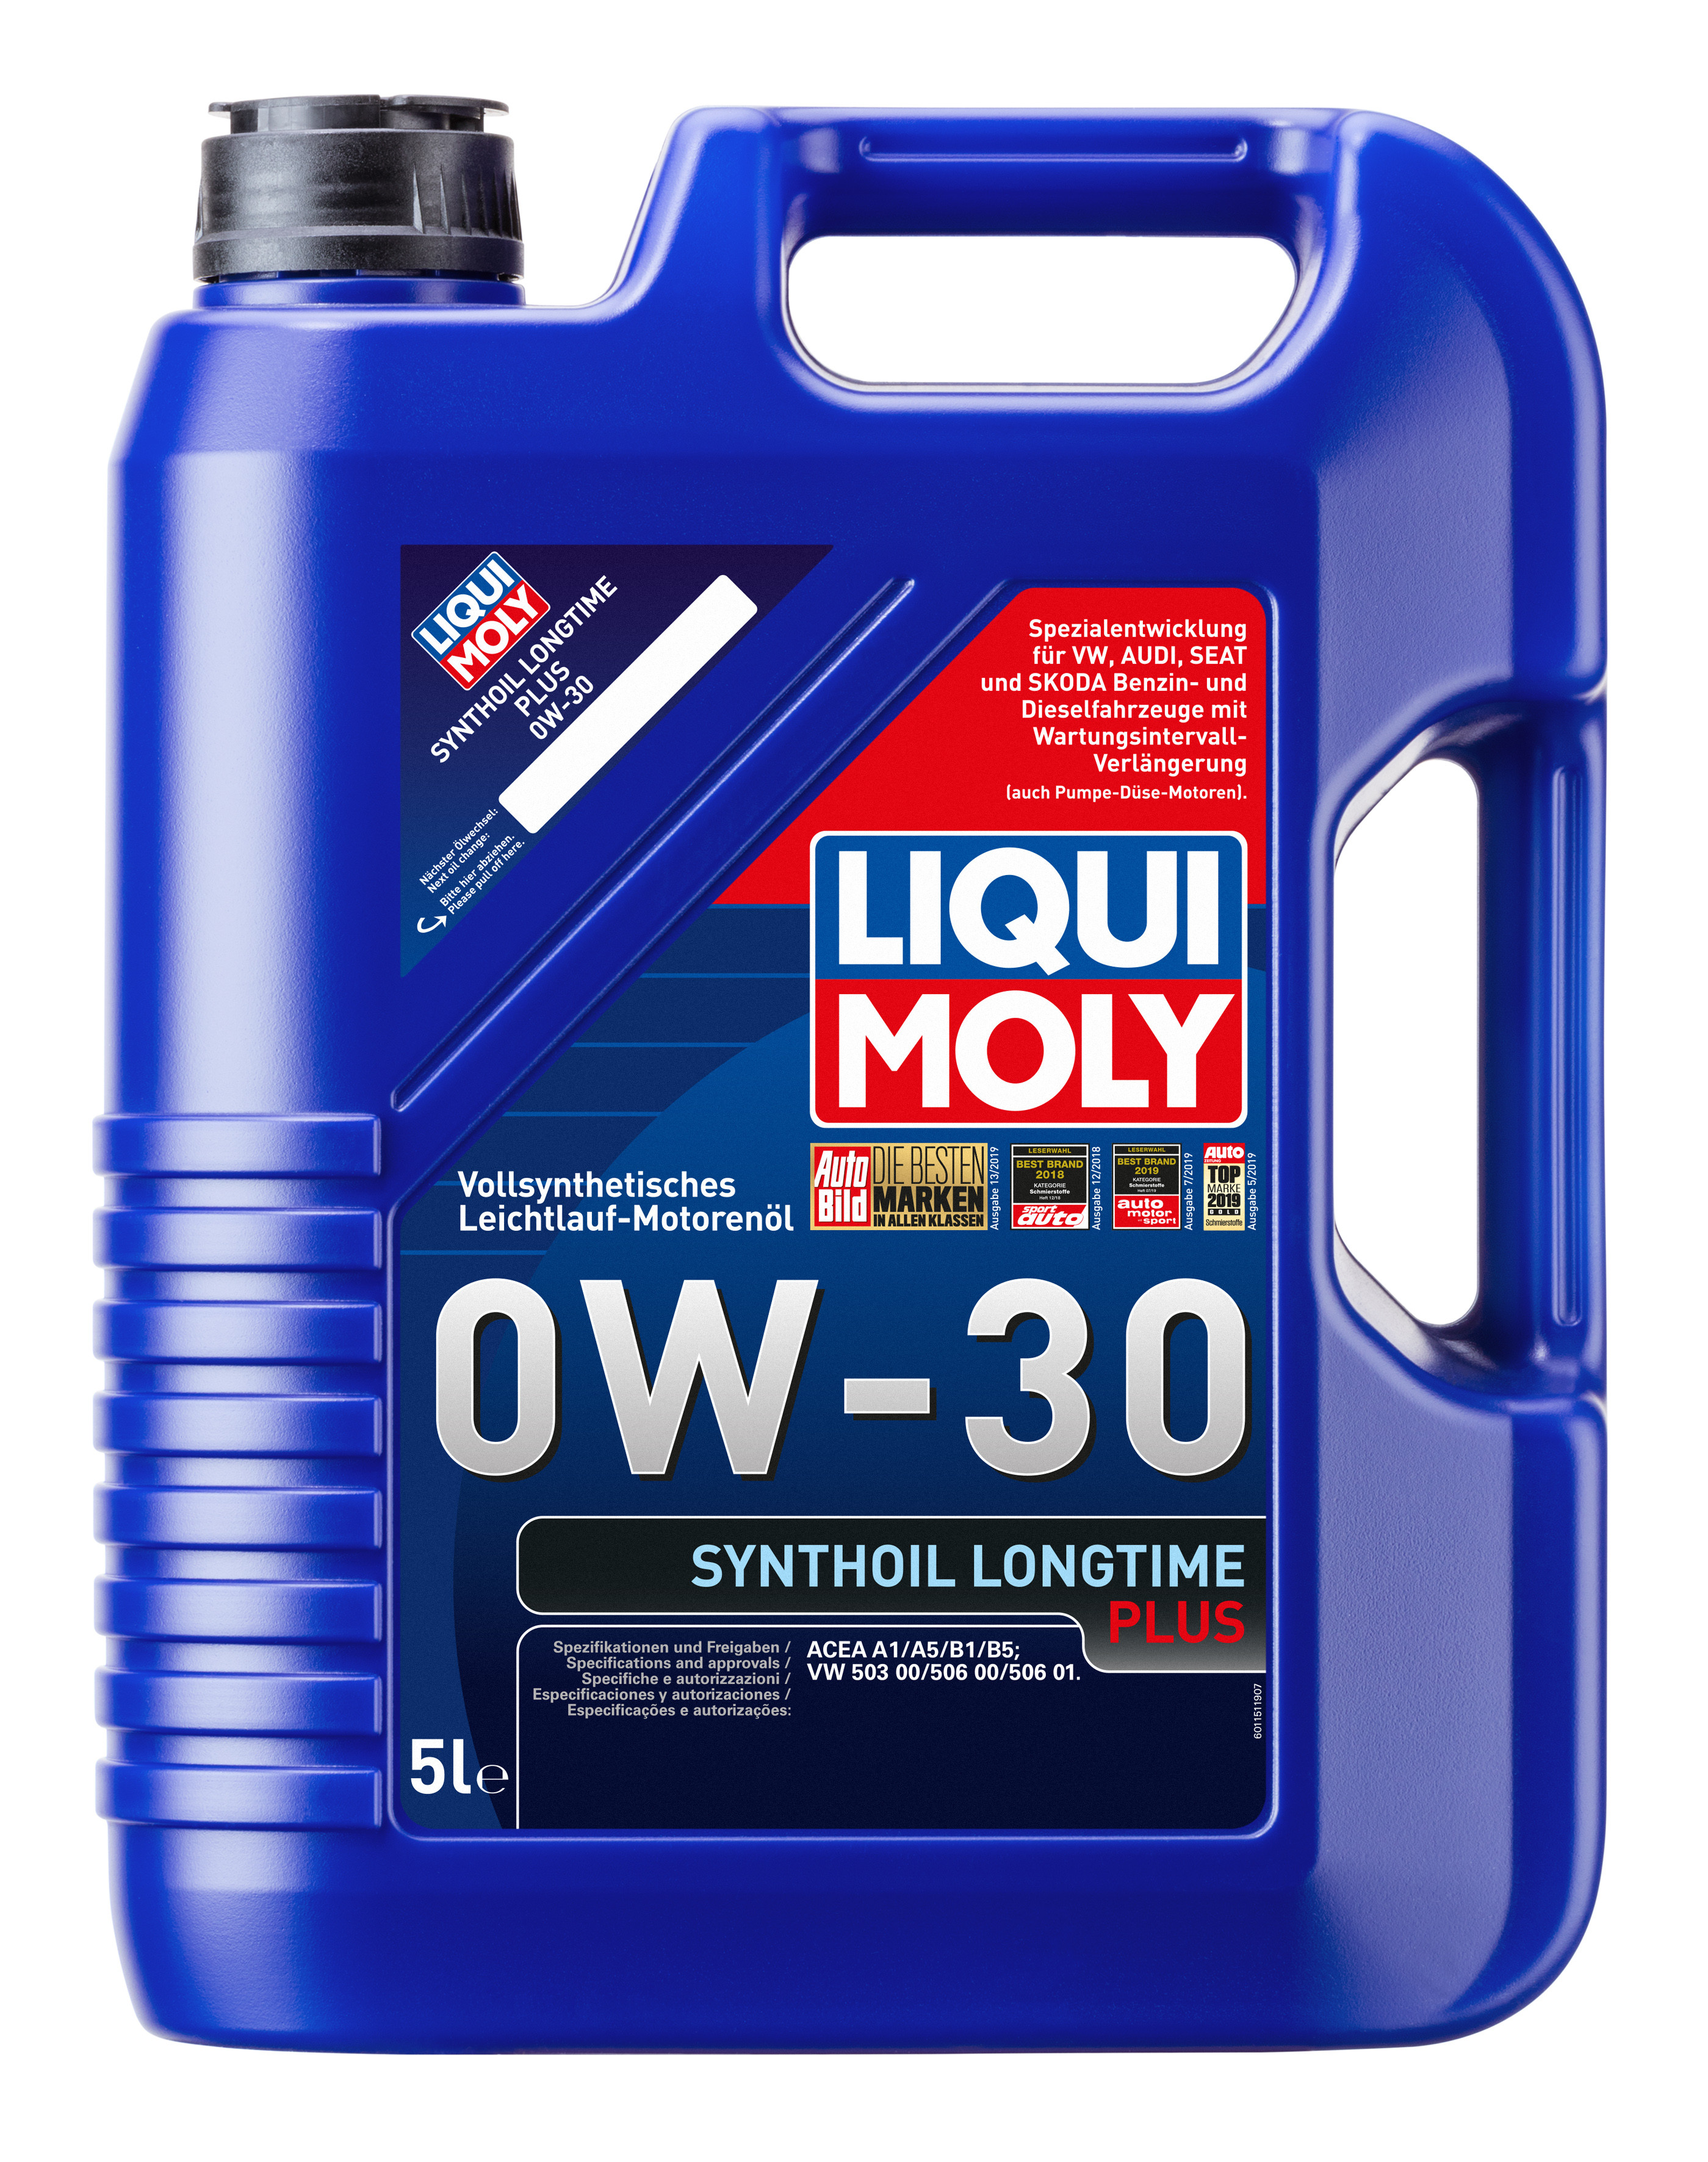 Liqui Moly 1151 Synthoil Longtime Plus 0W-30 Motoröl 5l - SAE 0W-30 .